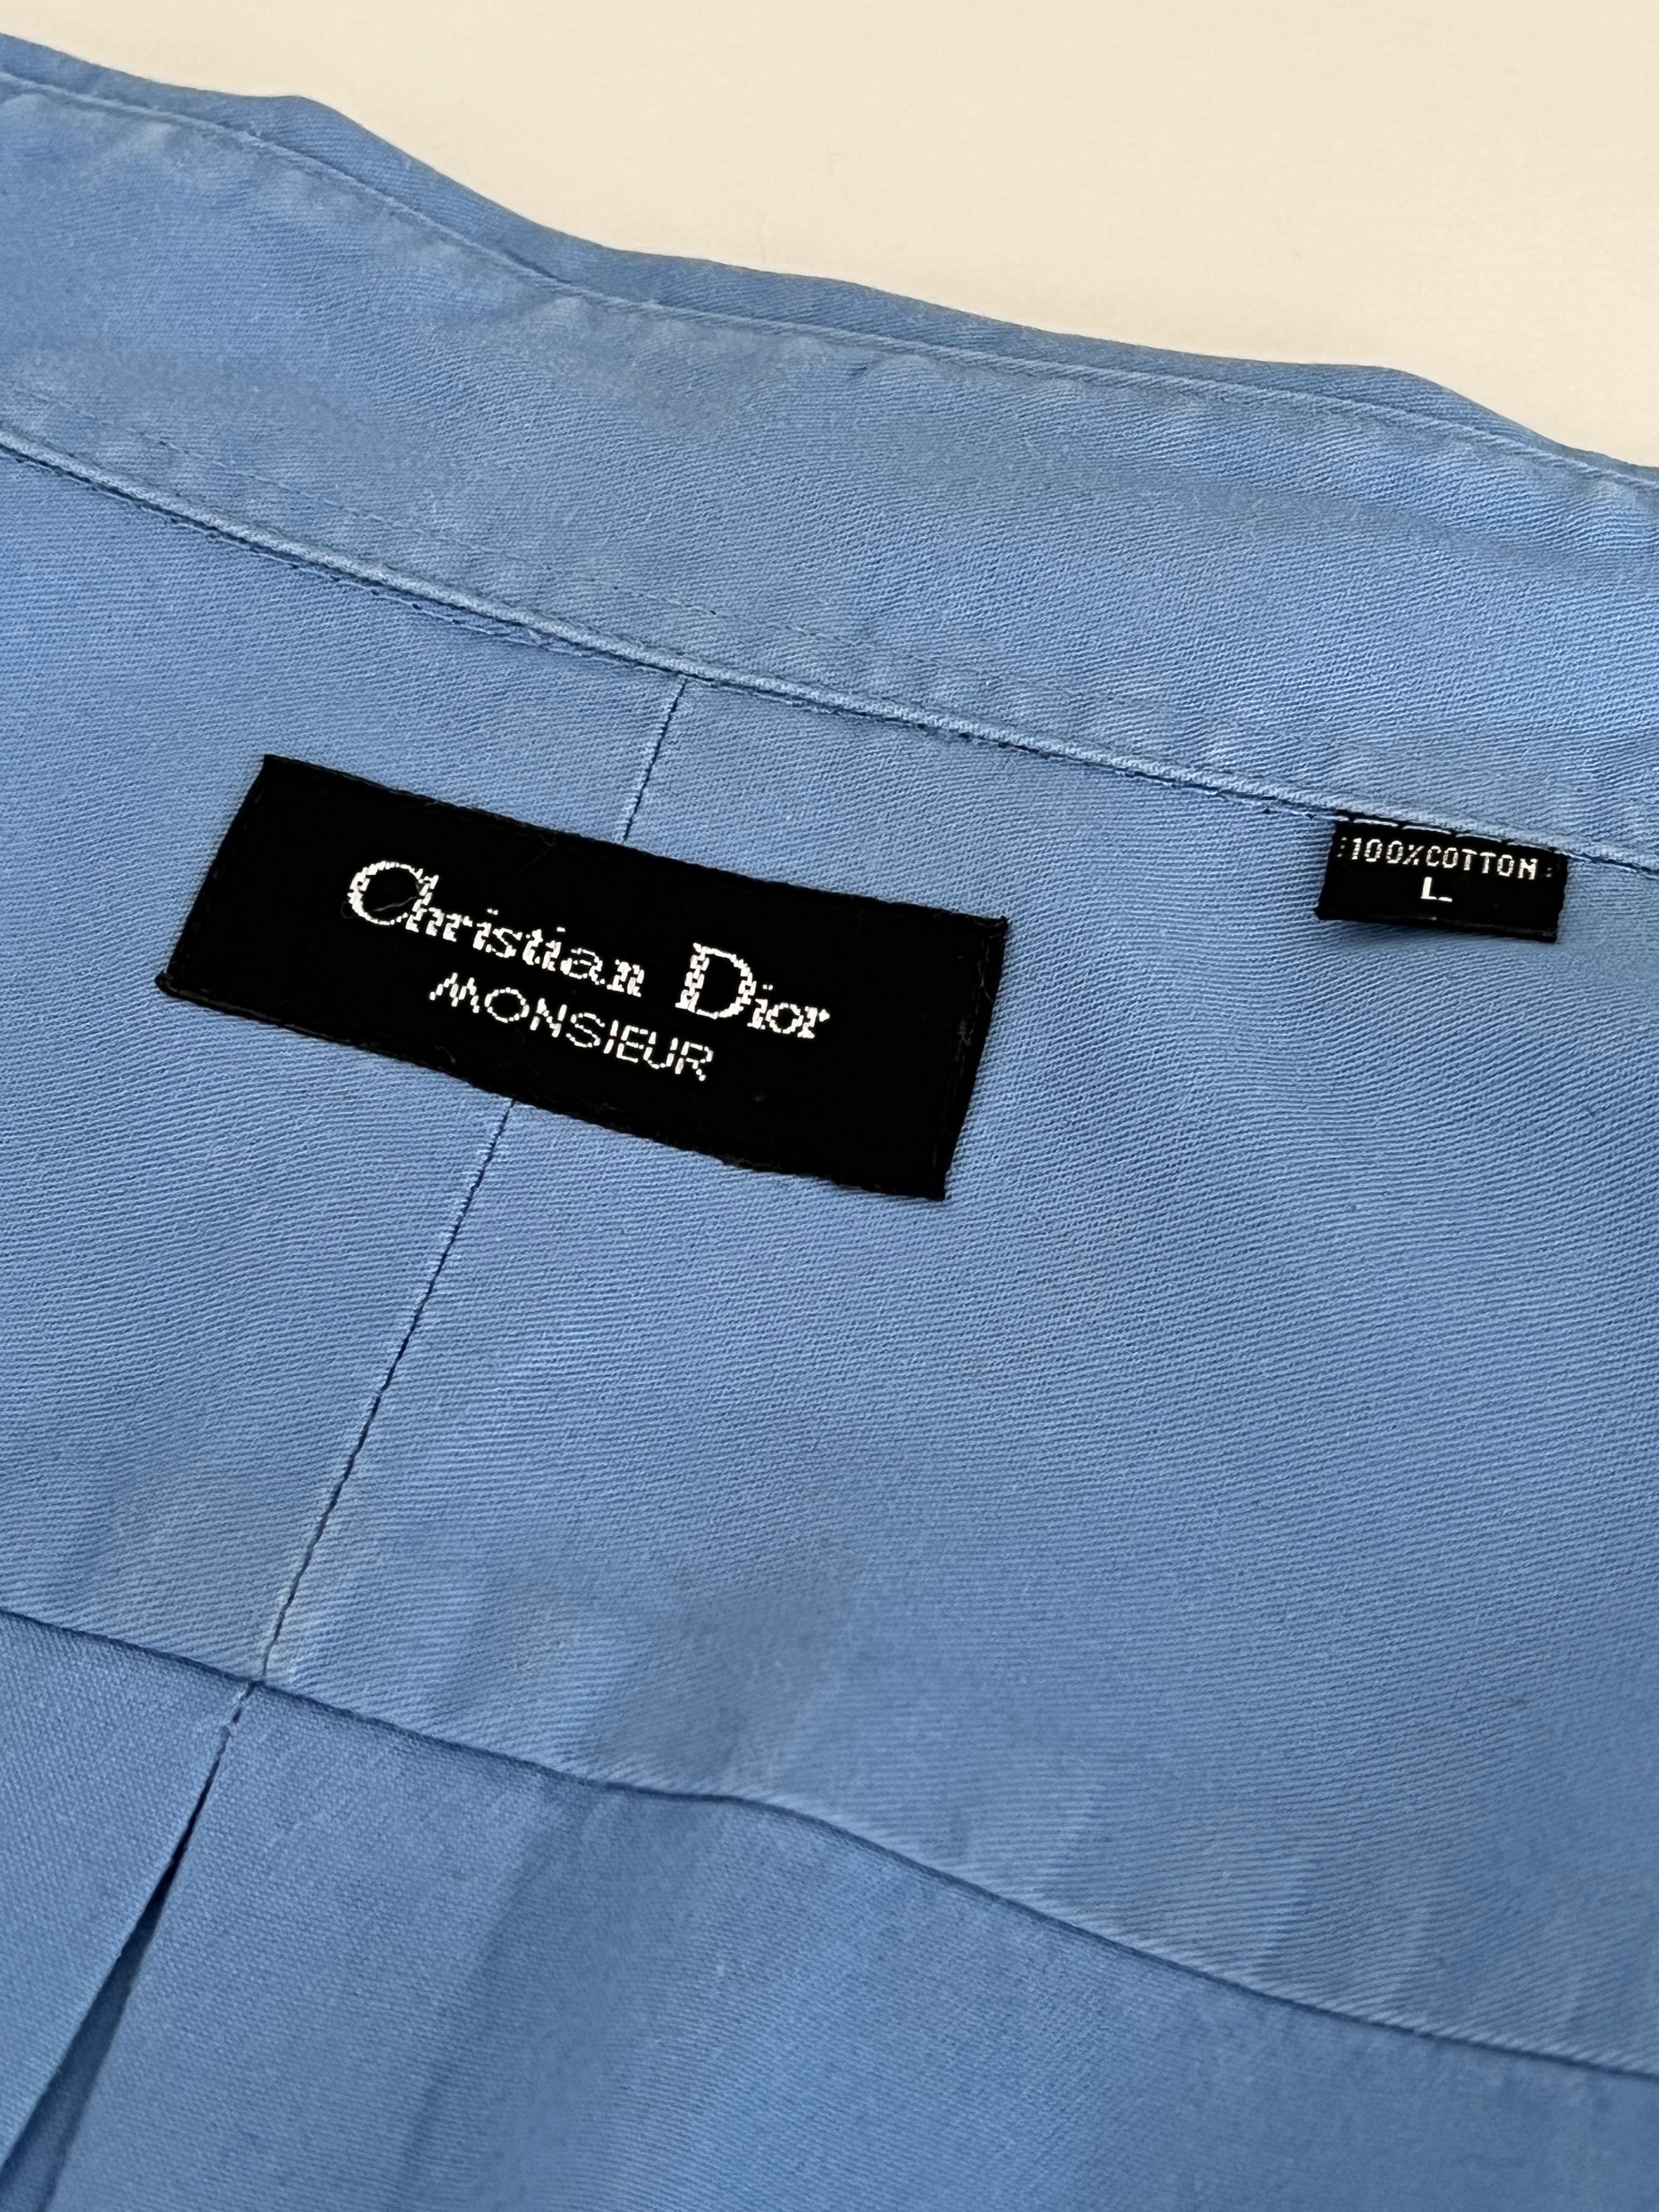 Vintage Christian Dior Sky Emblem Button Down